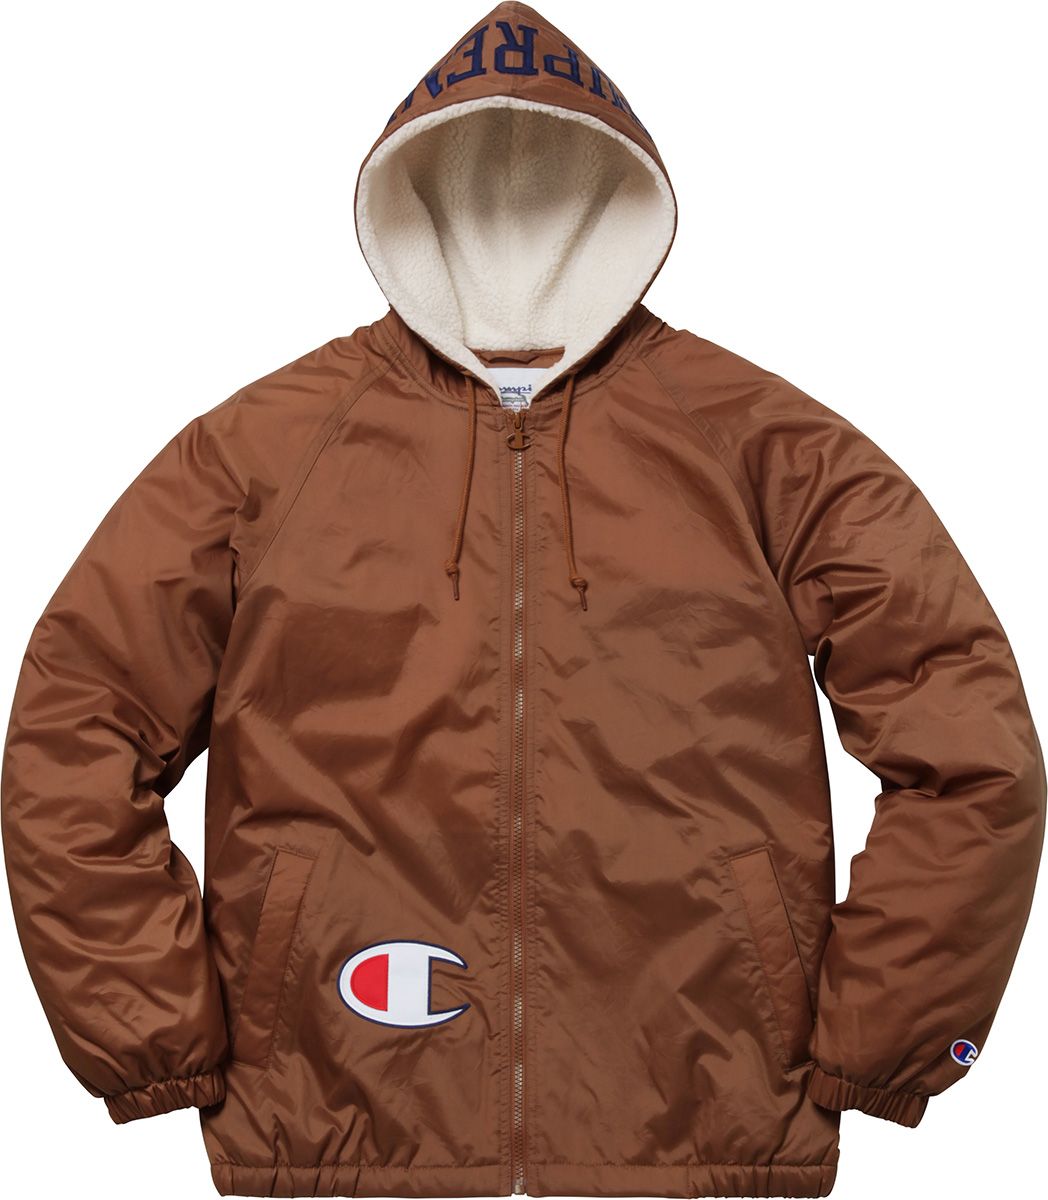 Supreme®/Champion® Sherpa Lined Hooded Jacket - Fall/Winter 2017 